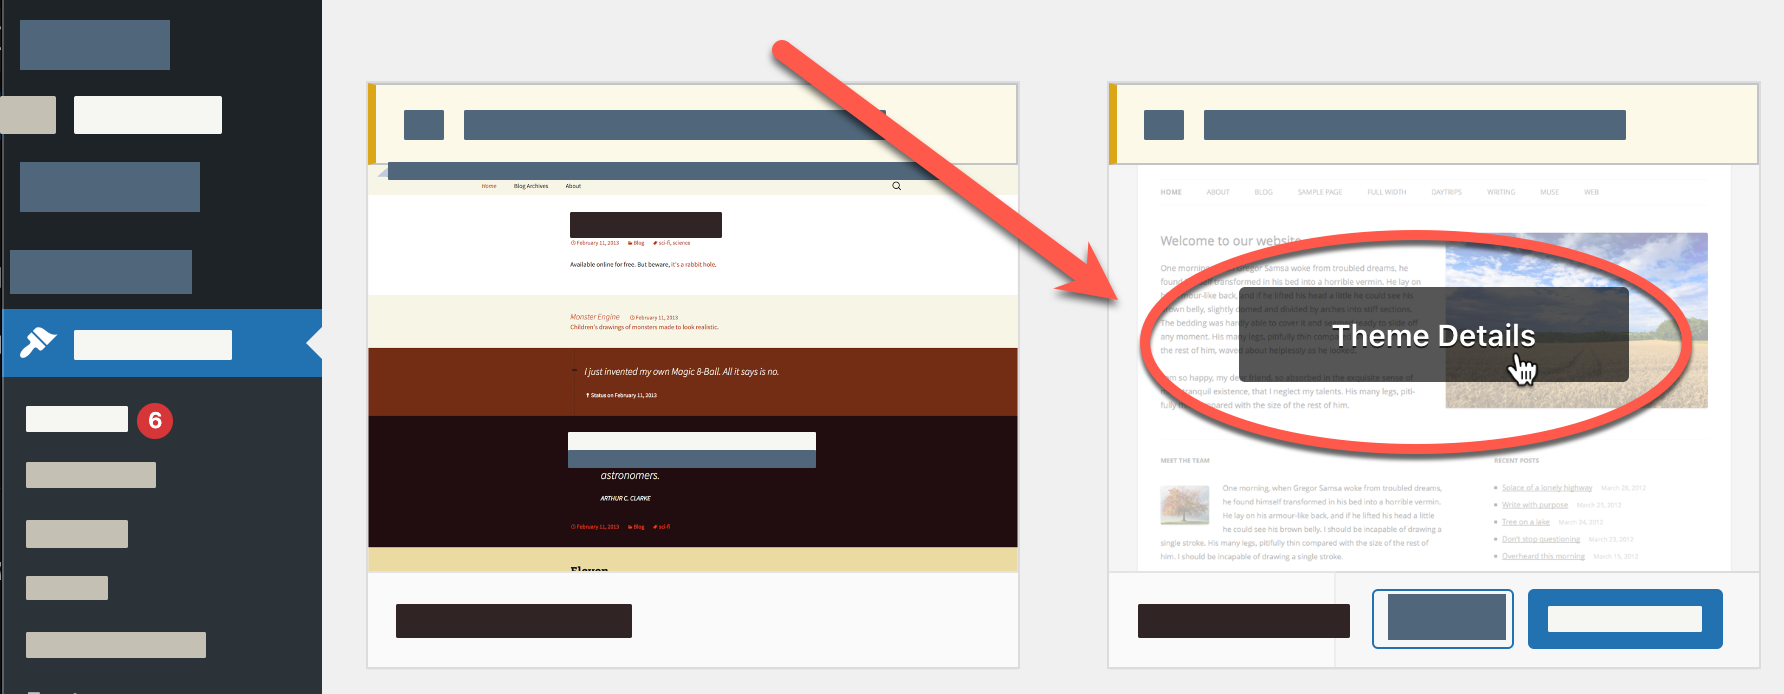 Wordpress show theme detail button 